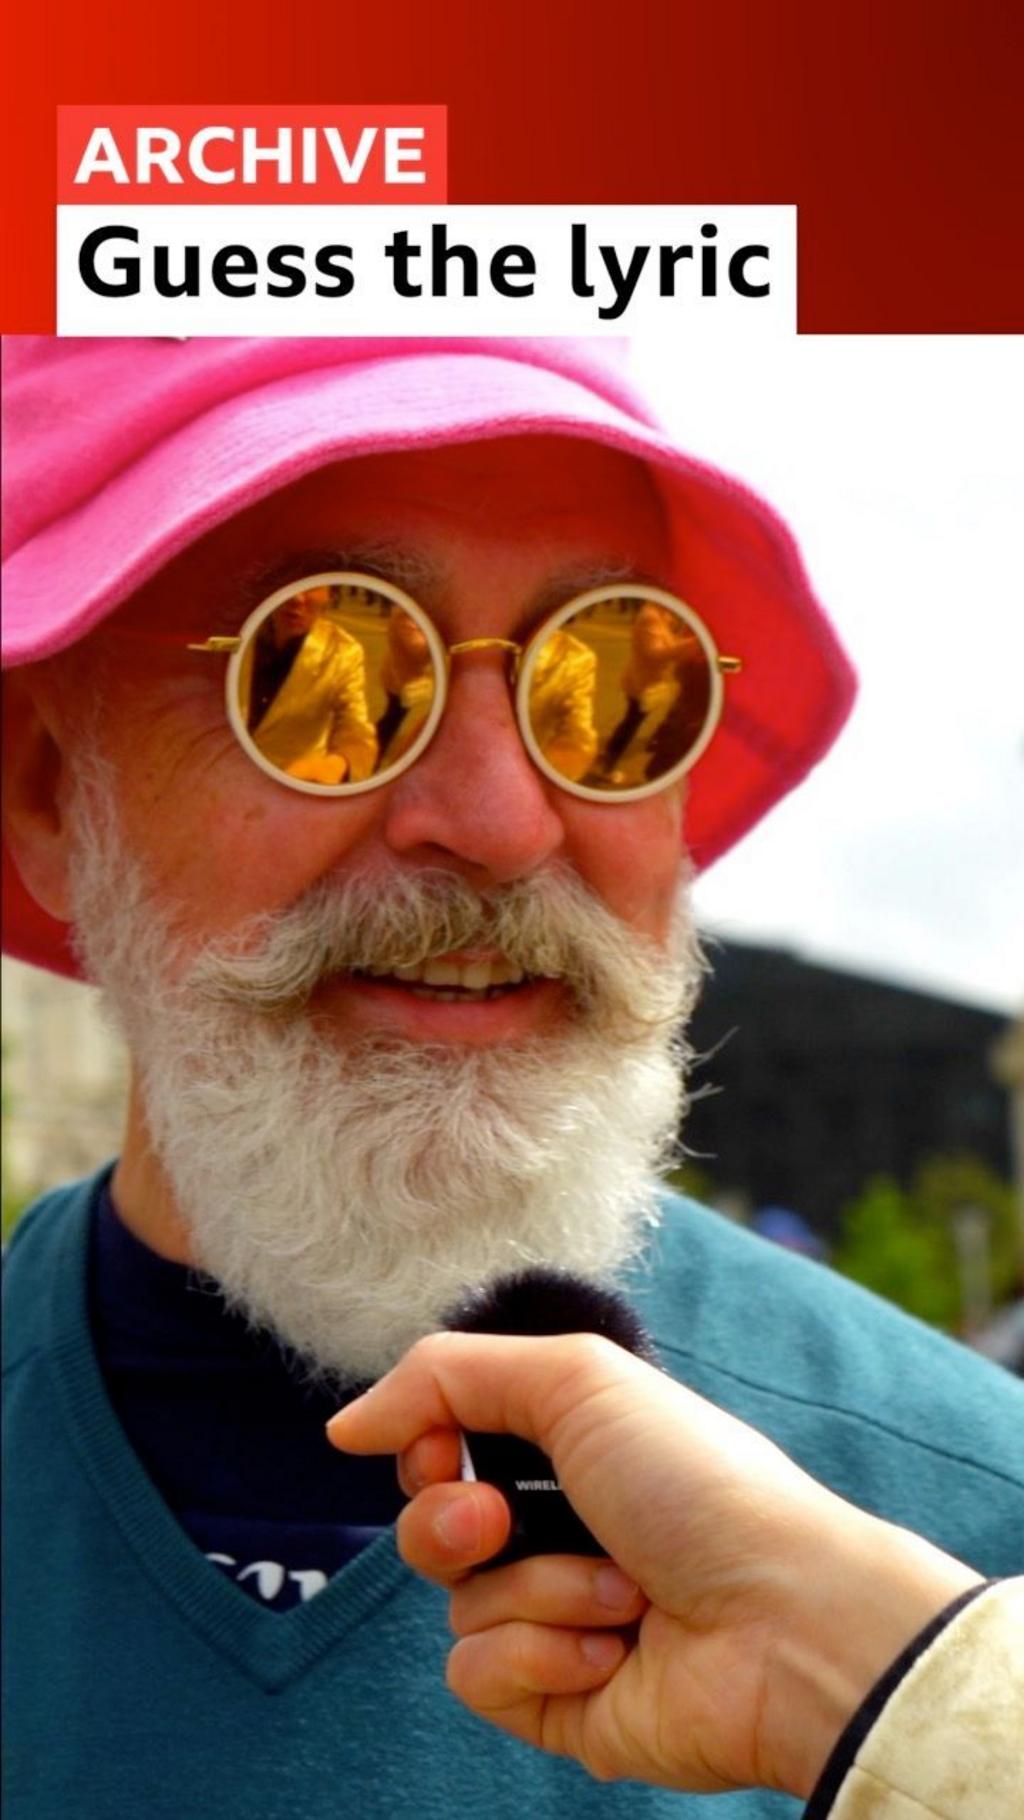 Man wearing pink hat in Liverpool